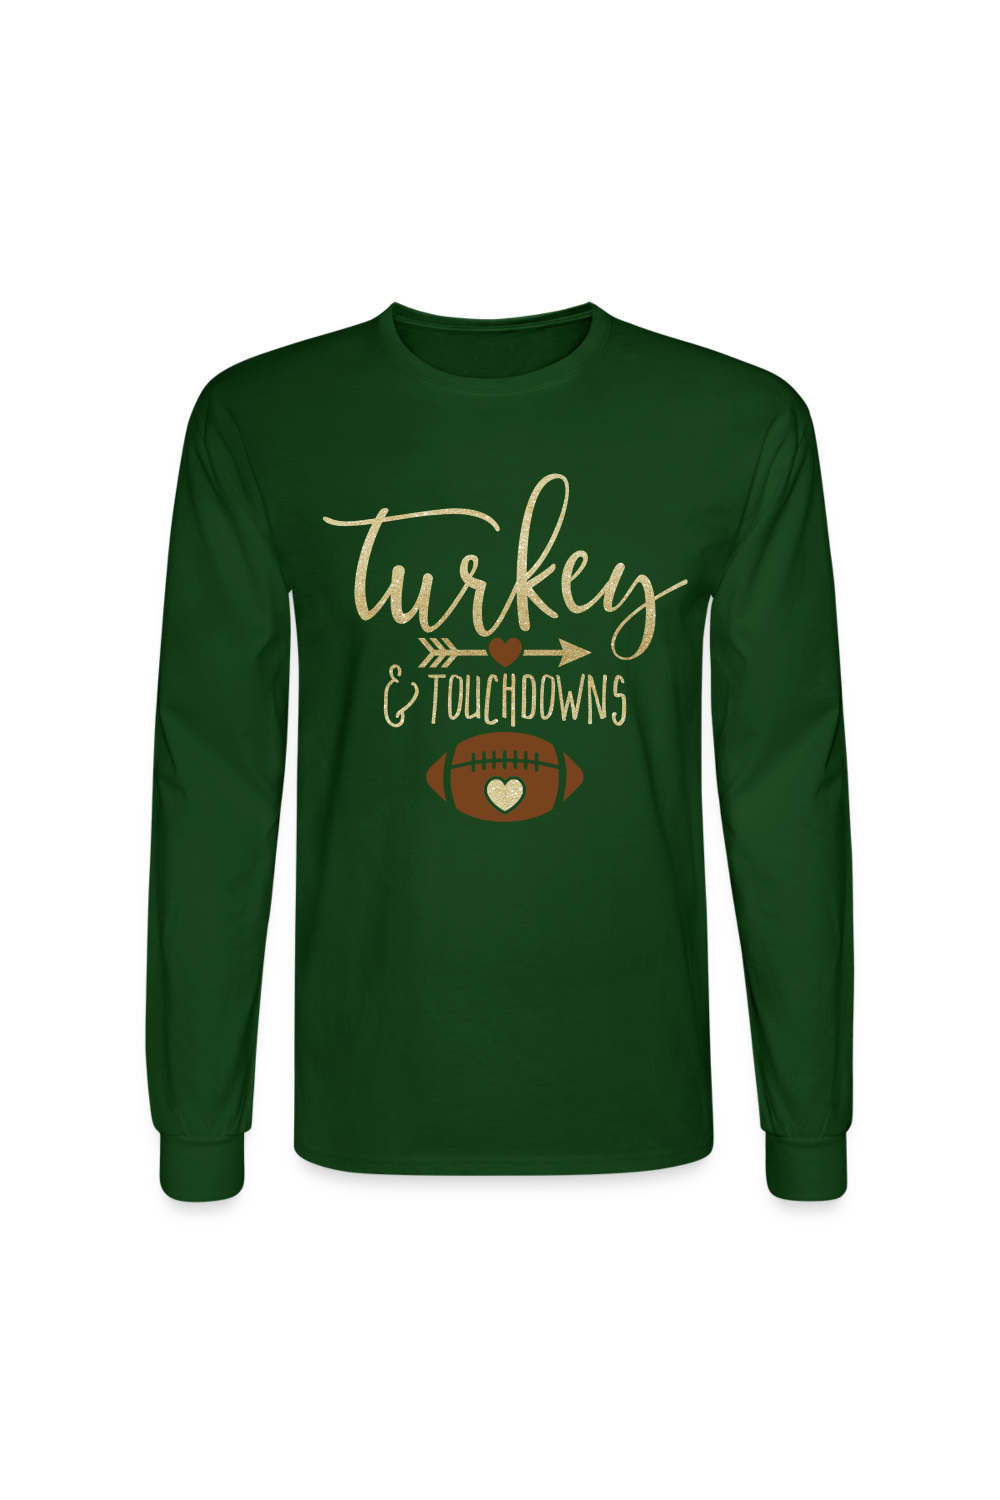 Men Thanksgiving T-Shirt Turkey and Touchdowns Long Sleeve - forest green - NicholesGifts.online